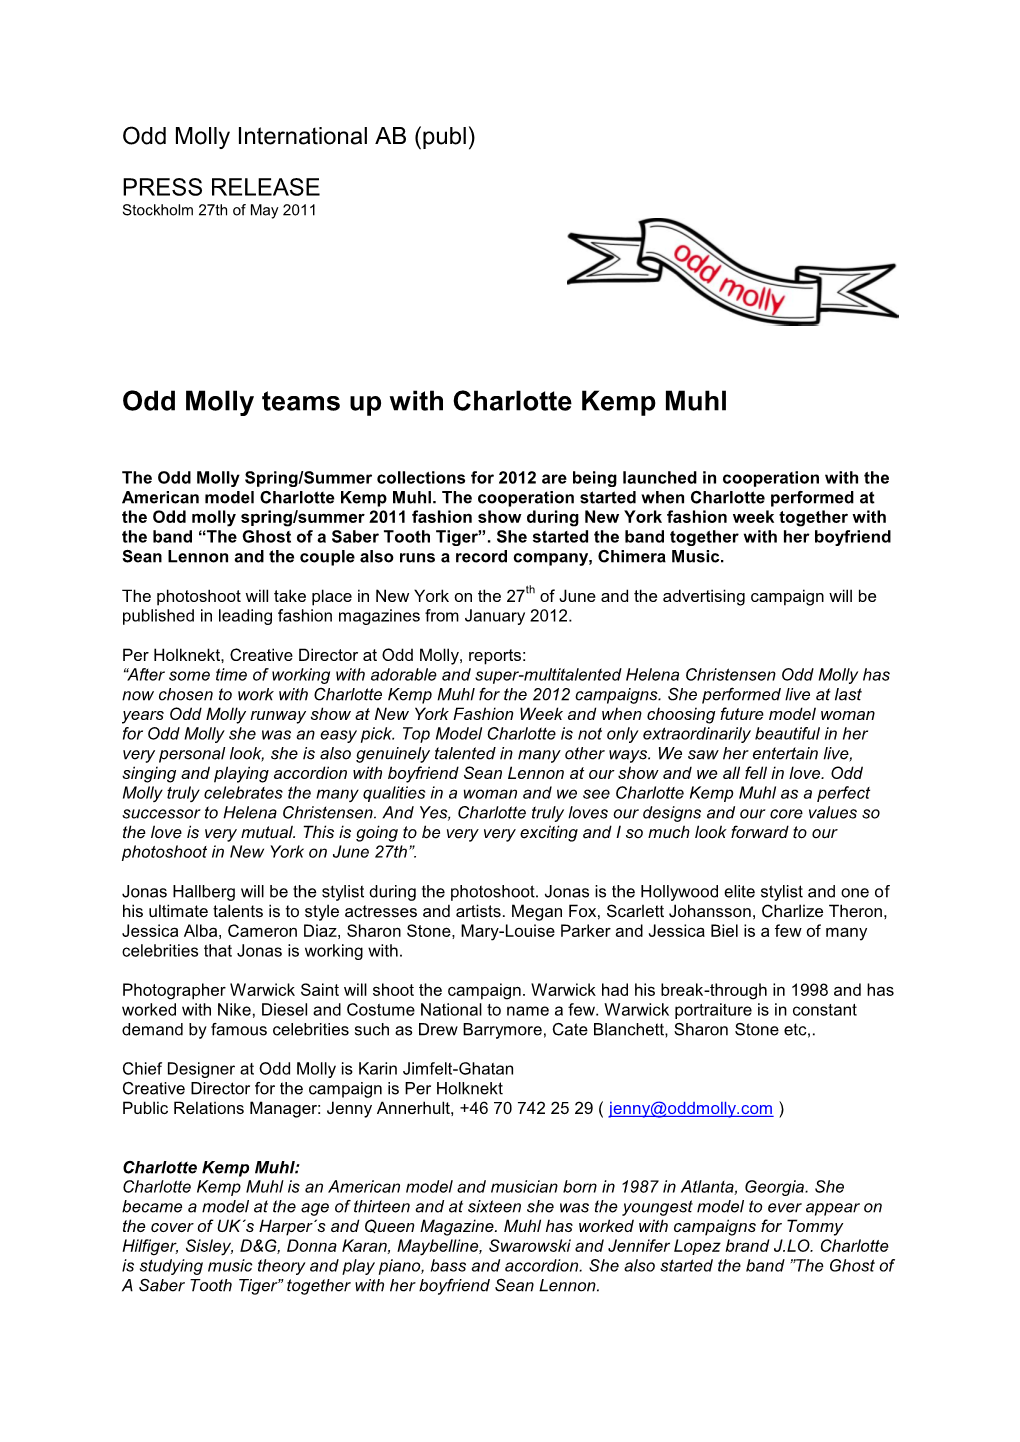 Odd Molly Teams up with Charlotte Kemp Muhl